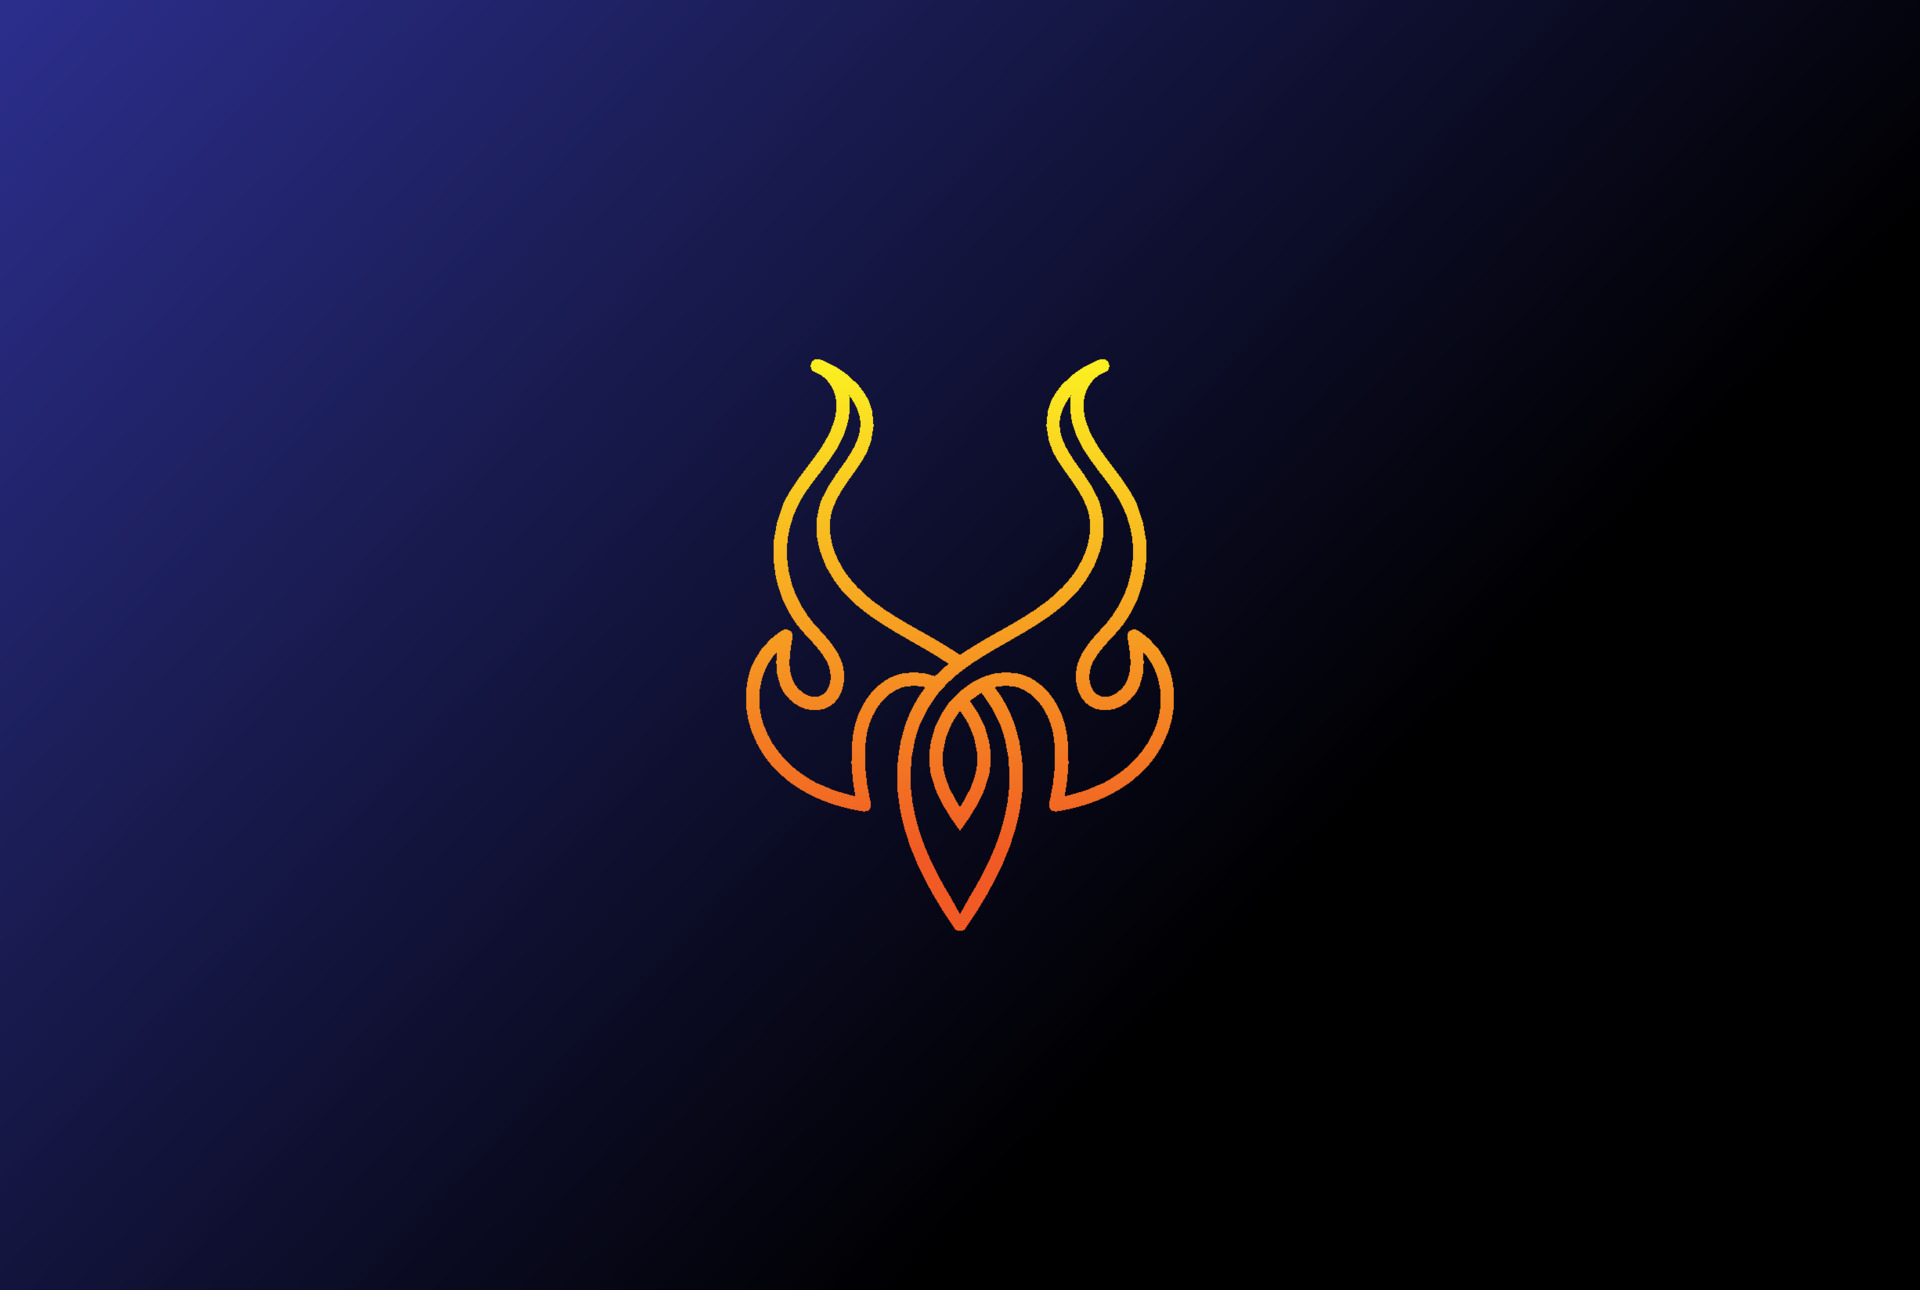 Simple Tribal or Bull Devil Horn Fire Flame Tattoo Logo Design Vector  5462096 Vector Art at Vecteezy